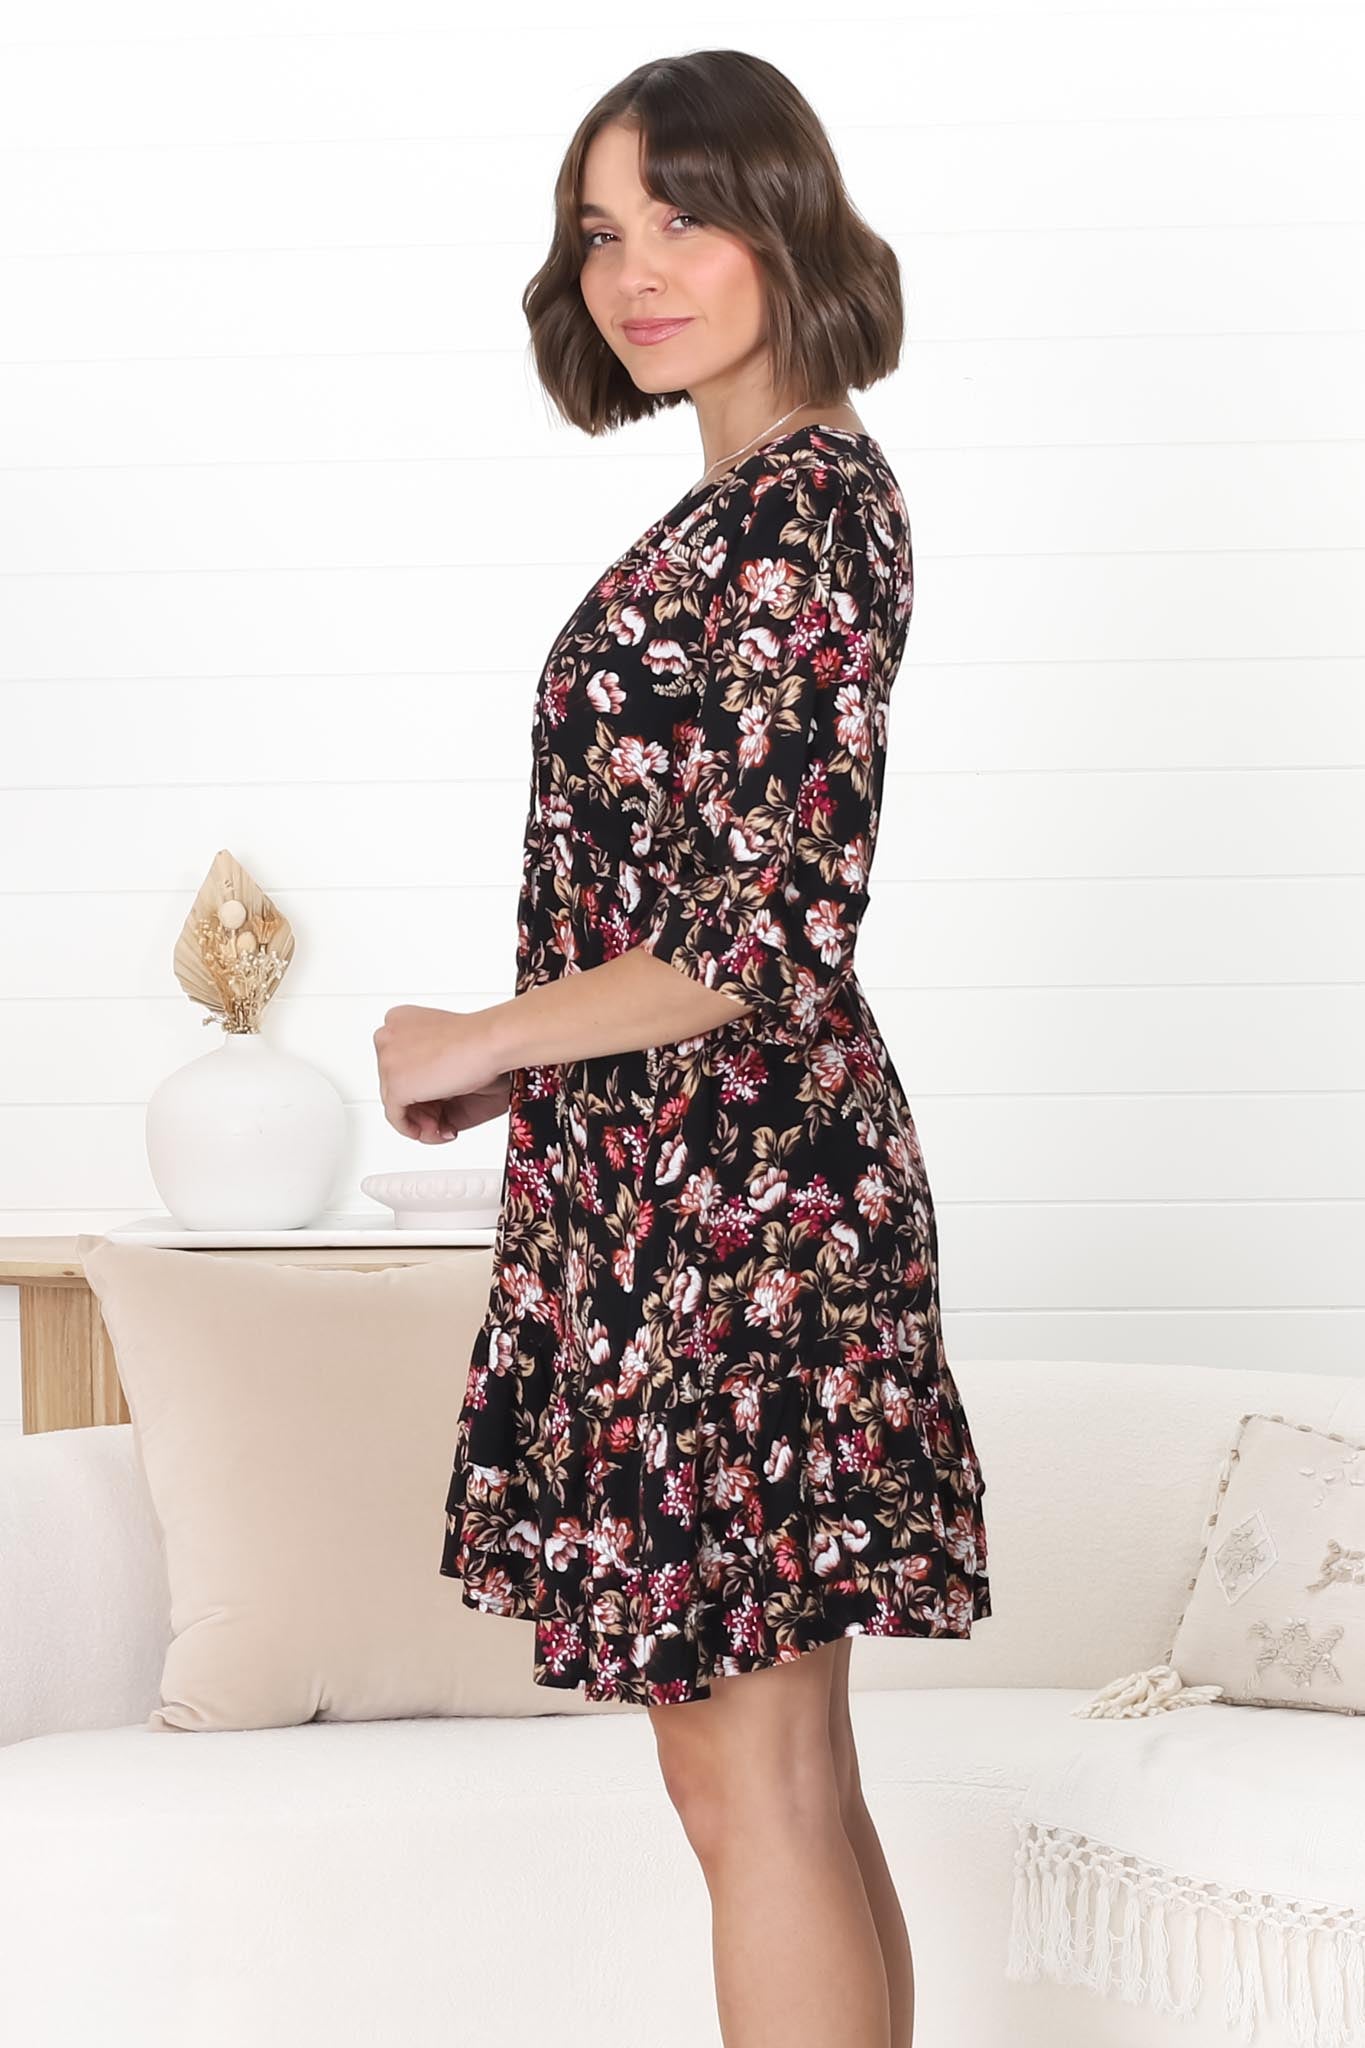 JAASE - Faith Mini Dress: Pull Tie Waist A Line Dress in Kimber Print